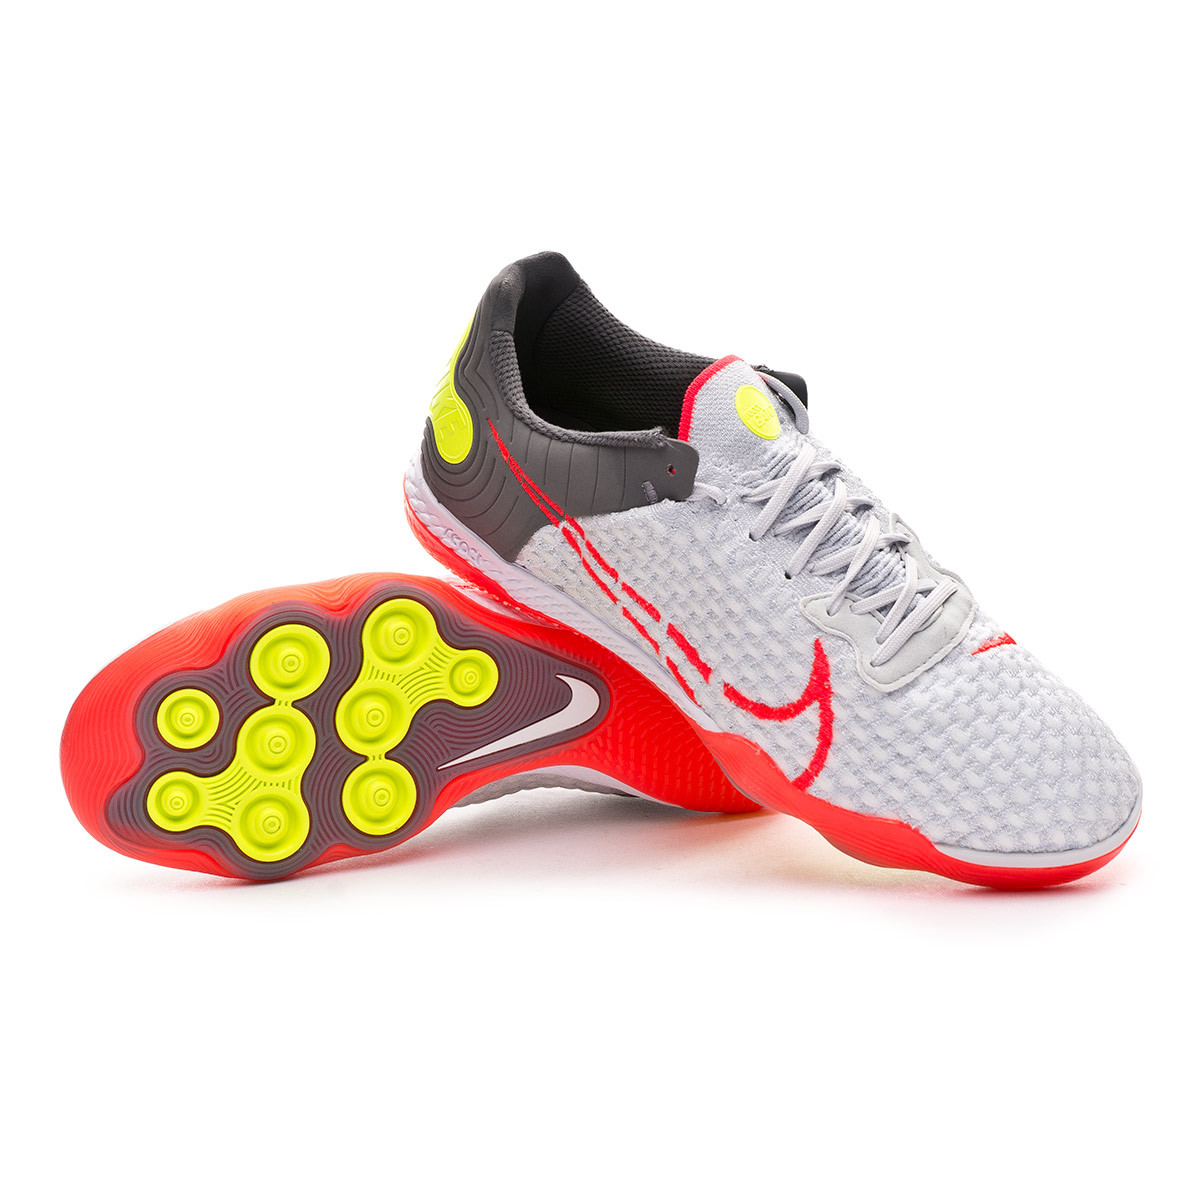 Tenis Nike React Gato White-Bright crimson-Cool grey - Tienda de fútbol  Fútbol Emotion